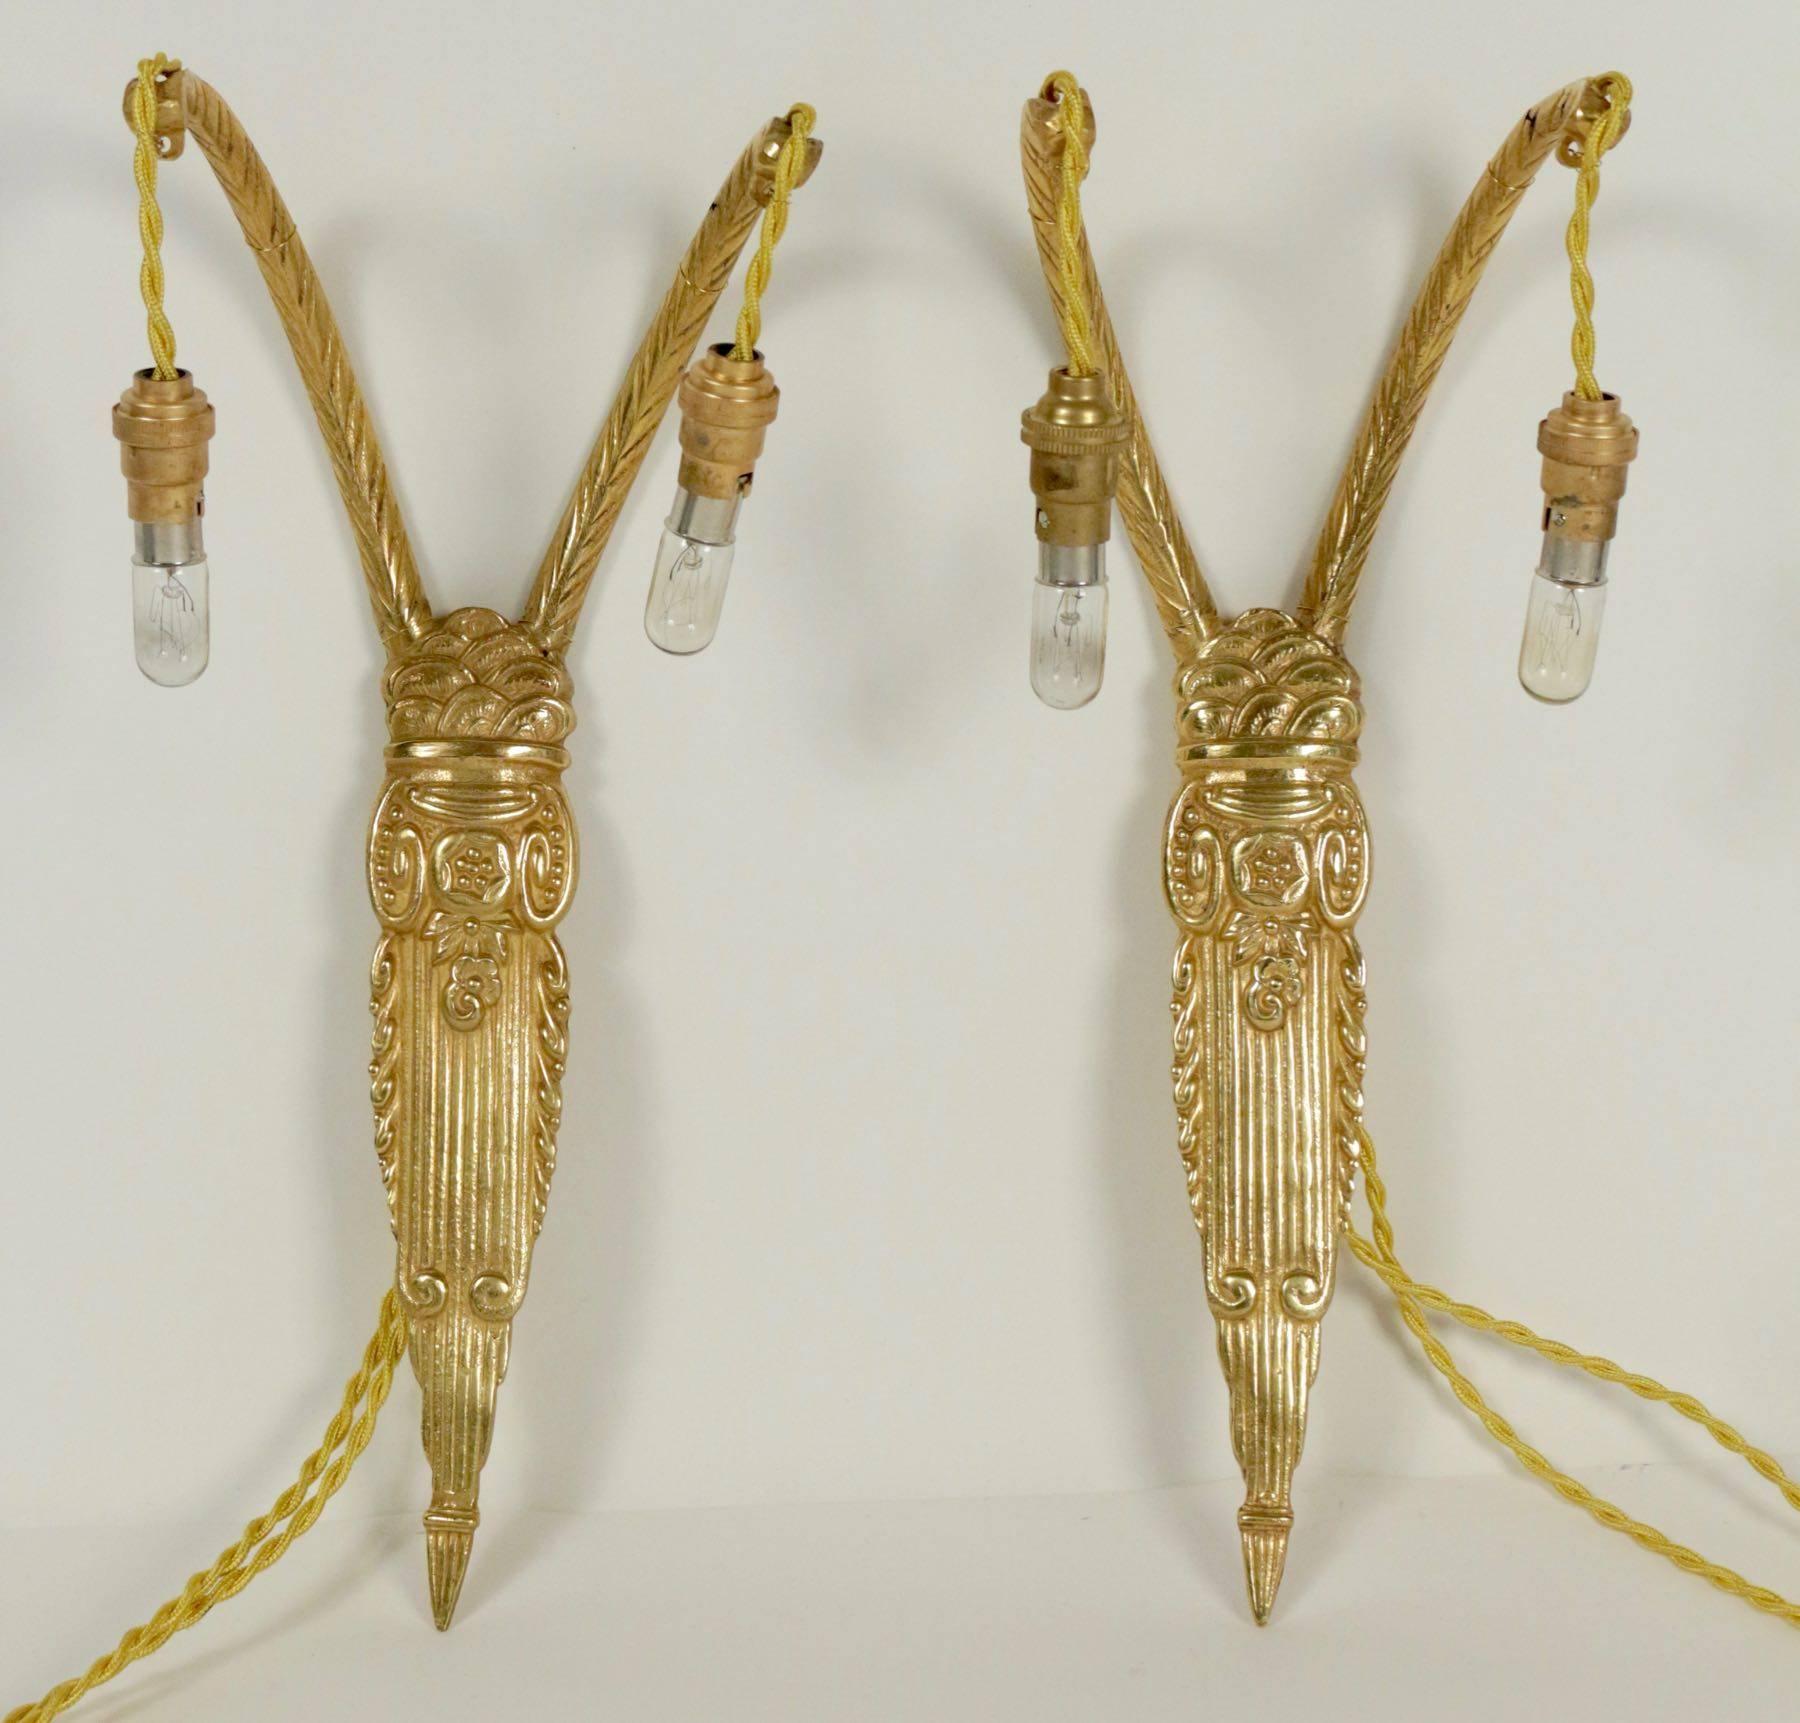 Paar Lampen 1930, Art Deco, antik, zwei Leuchten, vergoldete Bronze. 
Maße: H 35cm, B 16cm, B 12cm.